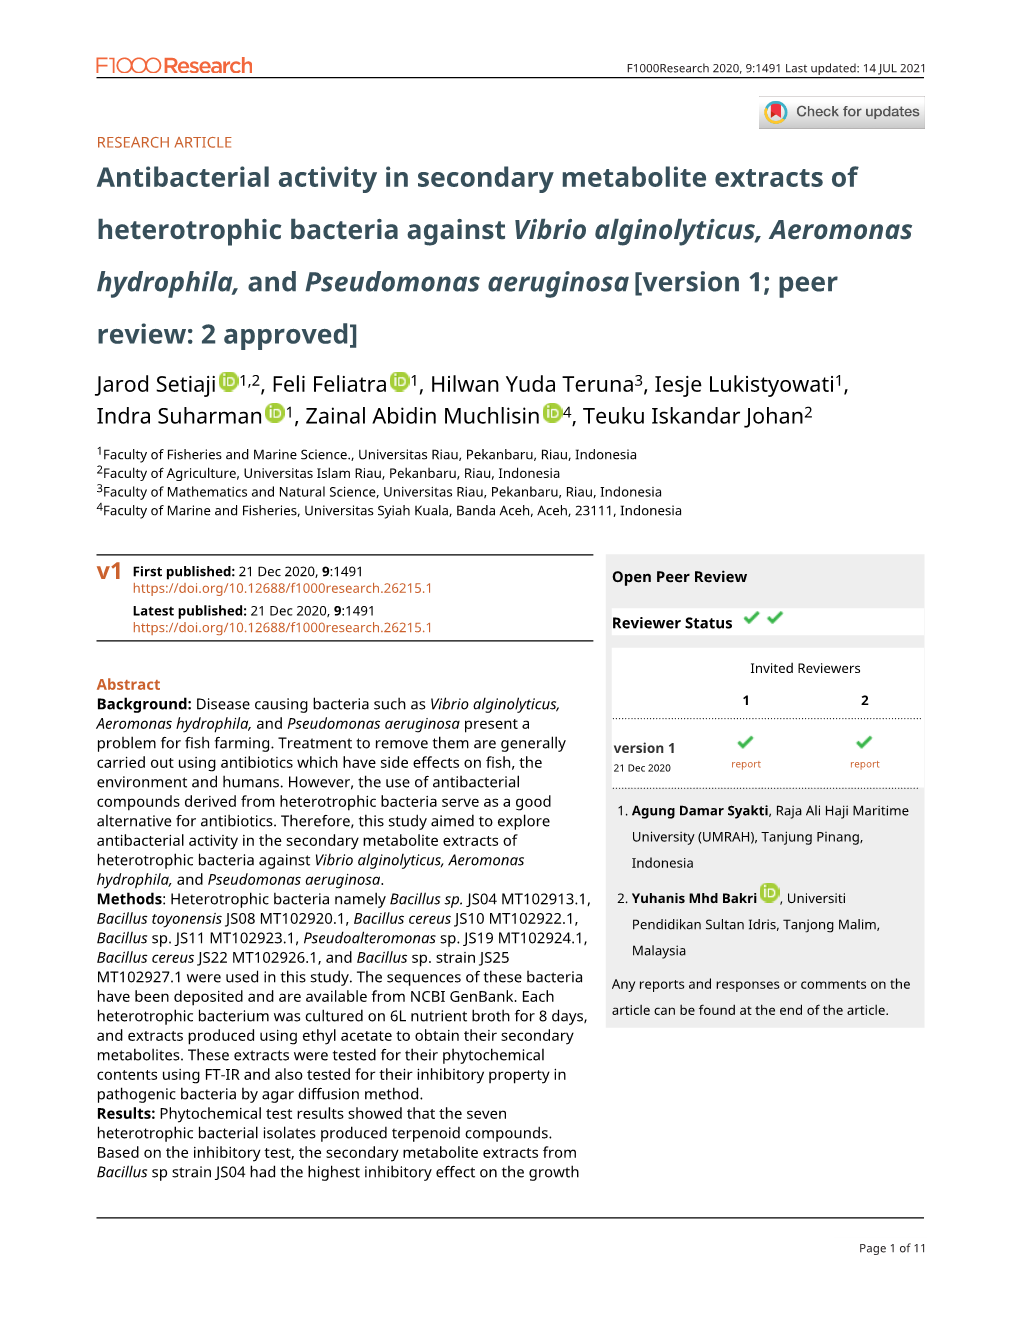 Antibacterial Activity in Secondary Metabolite Extracts of Heterotrophic Bacteria Against Vibrio Alginolyticus, Aeromonas Hydro